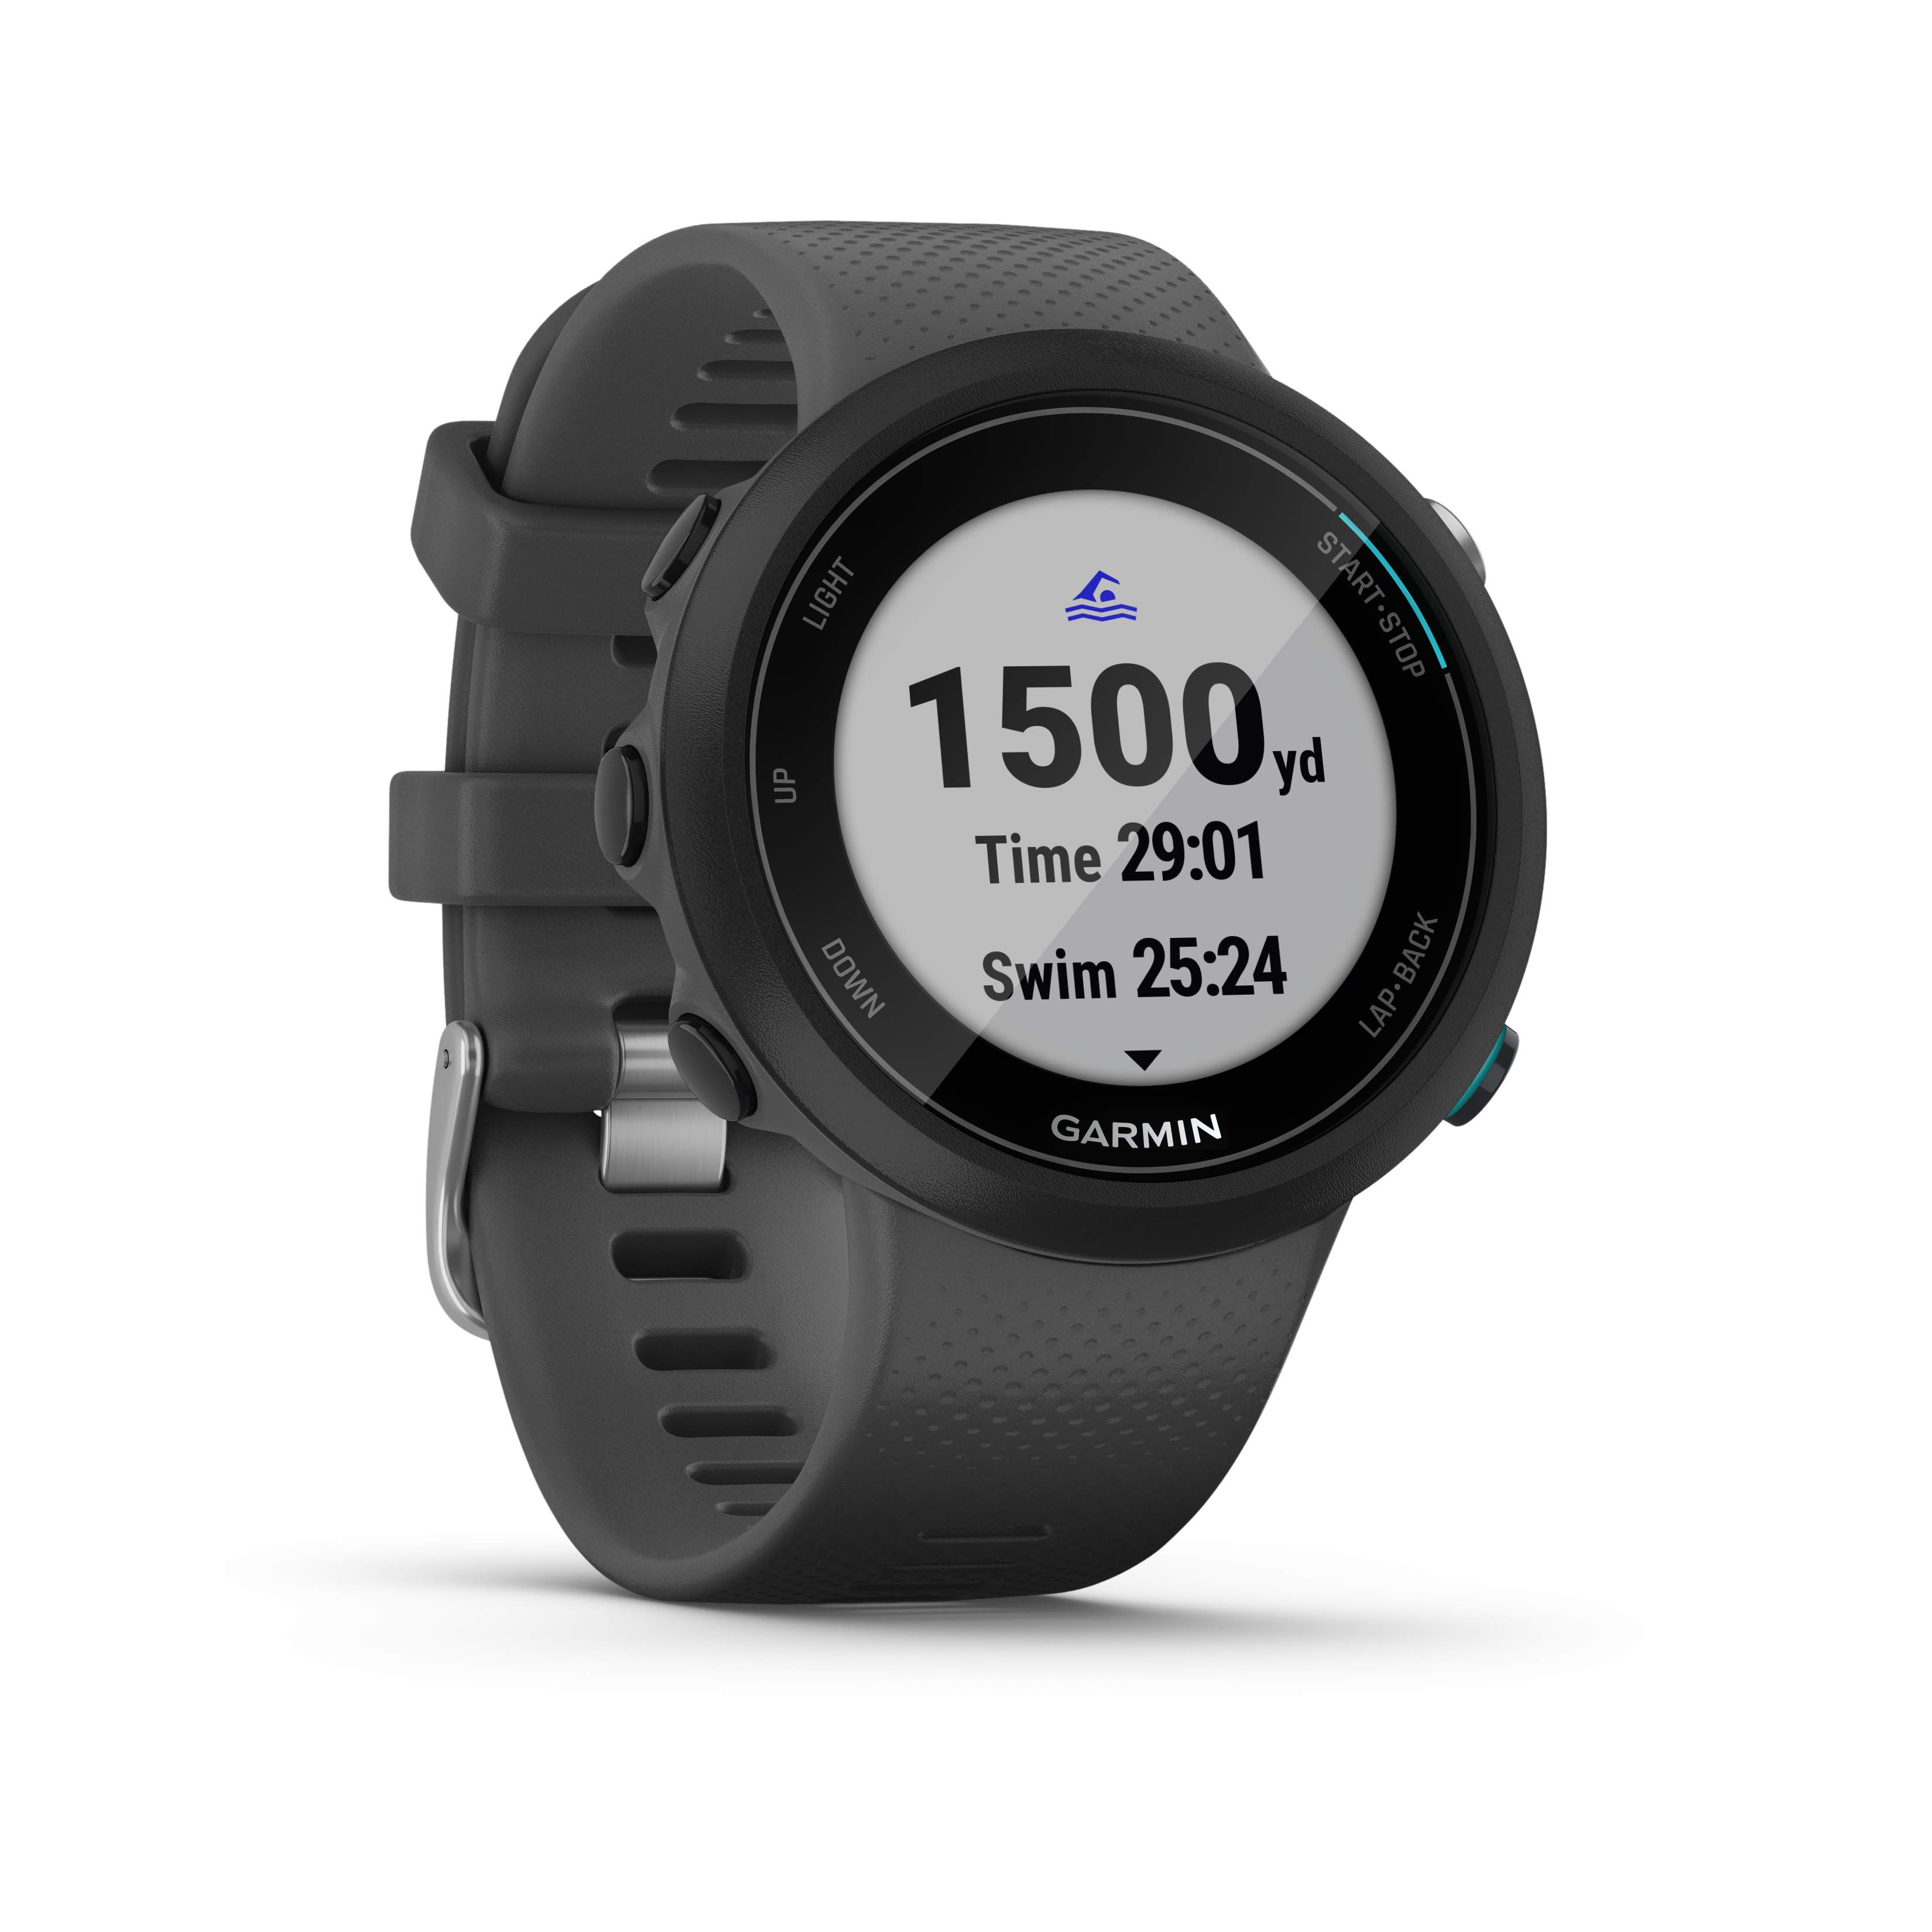 Swim anywhere, train everywhere the Garmin Swim™ a GPS smartwatch with underwater wrist-based heart rate | Business Wire